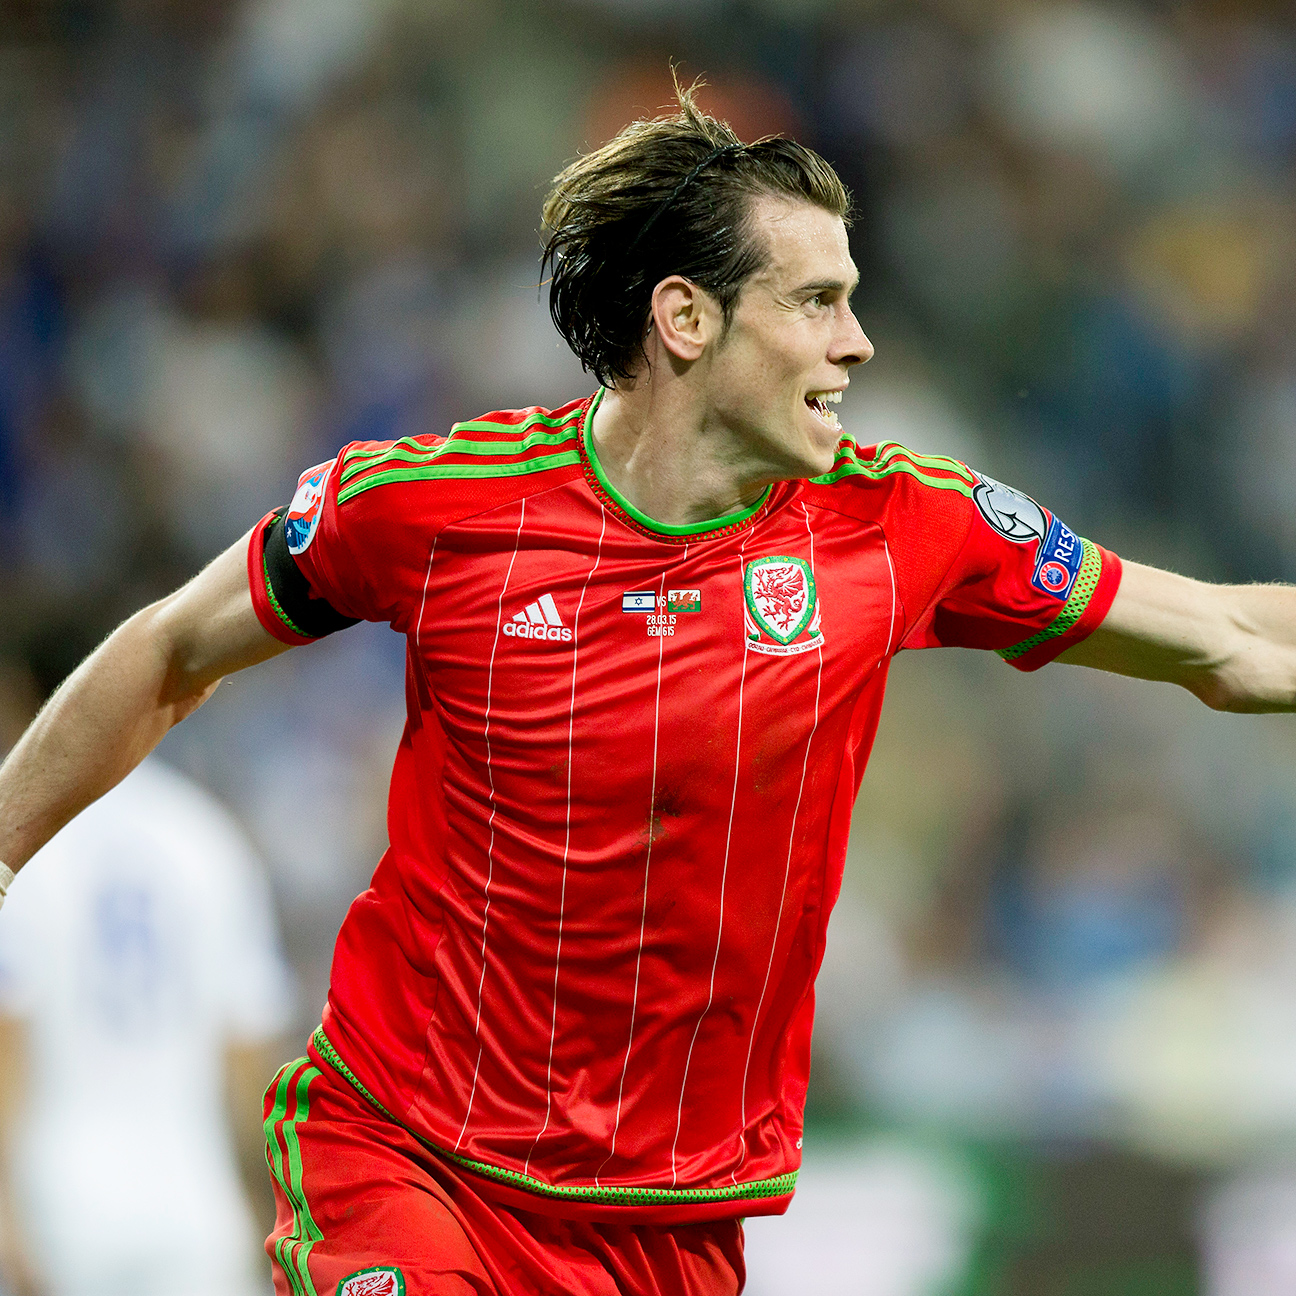 Cardiff, UK. 24th Mar, 2022. Gareth Bale (Wales no 11 ) celebrates